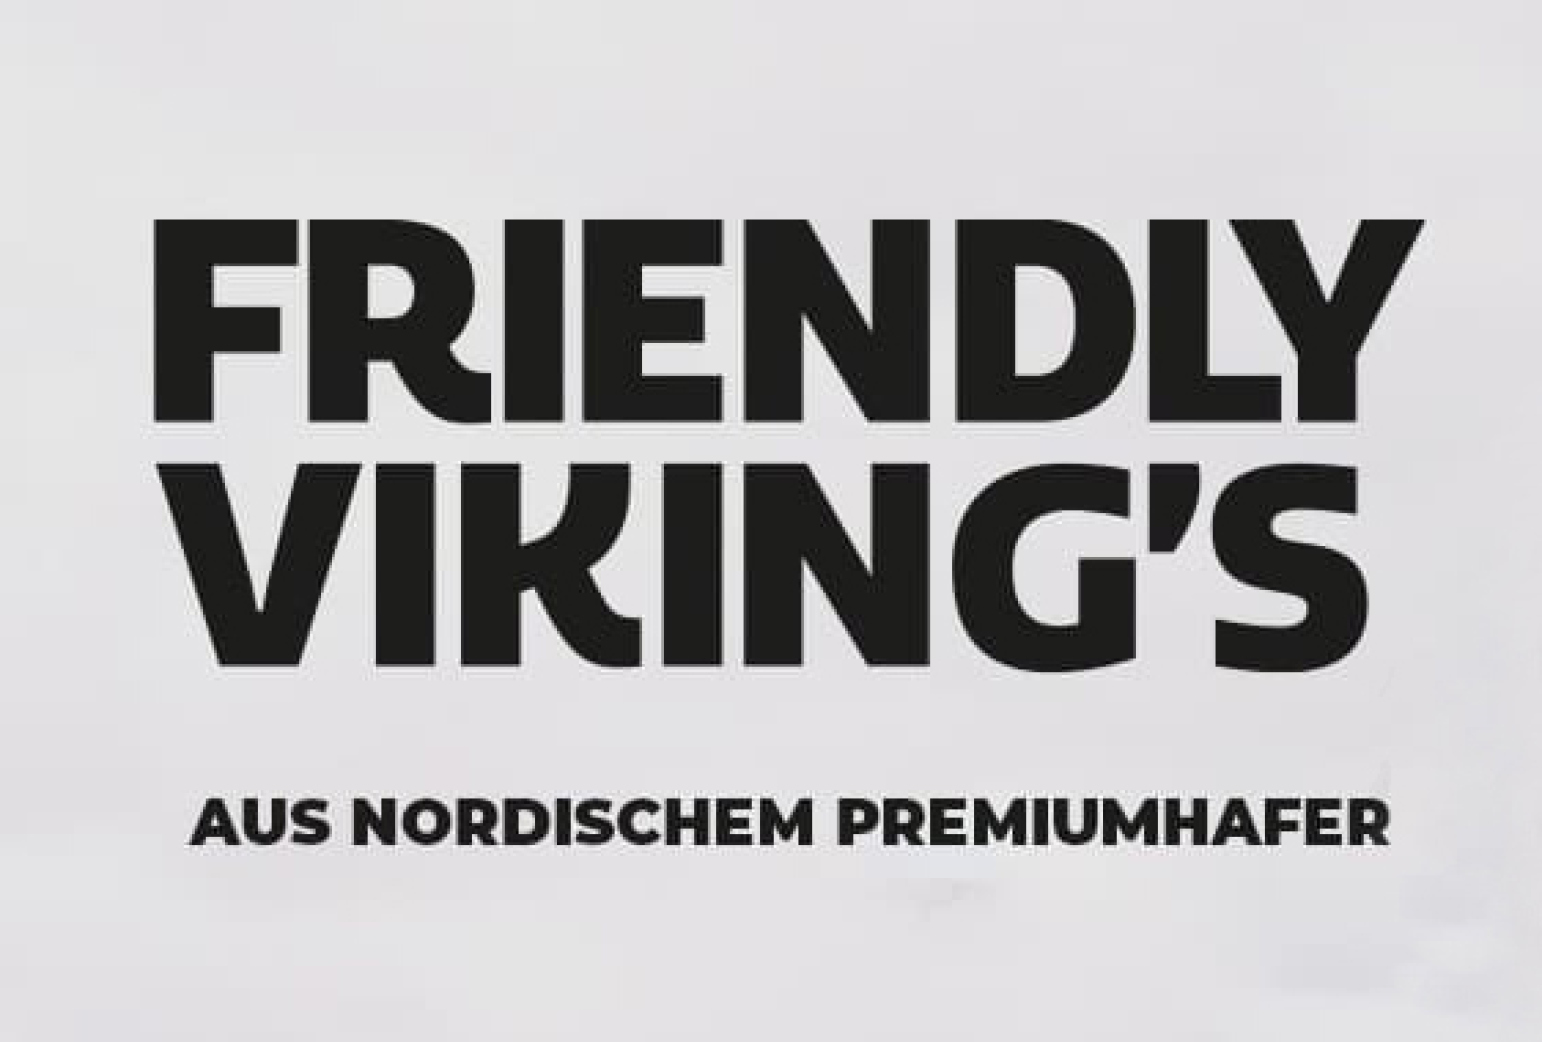 Friendly Viking's